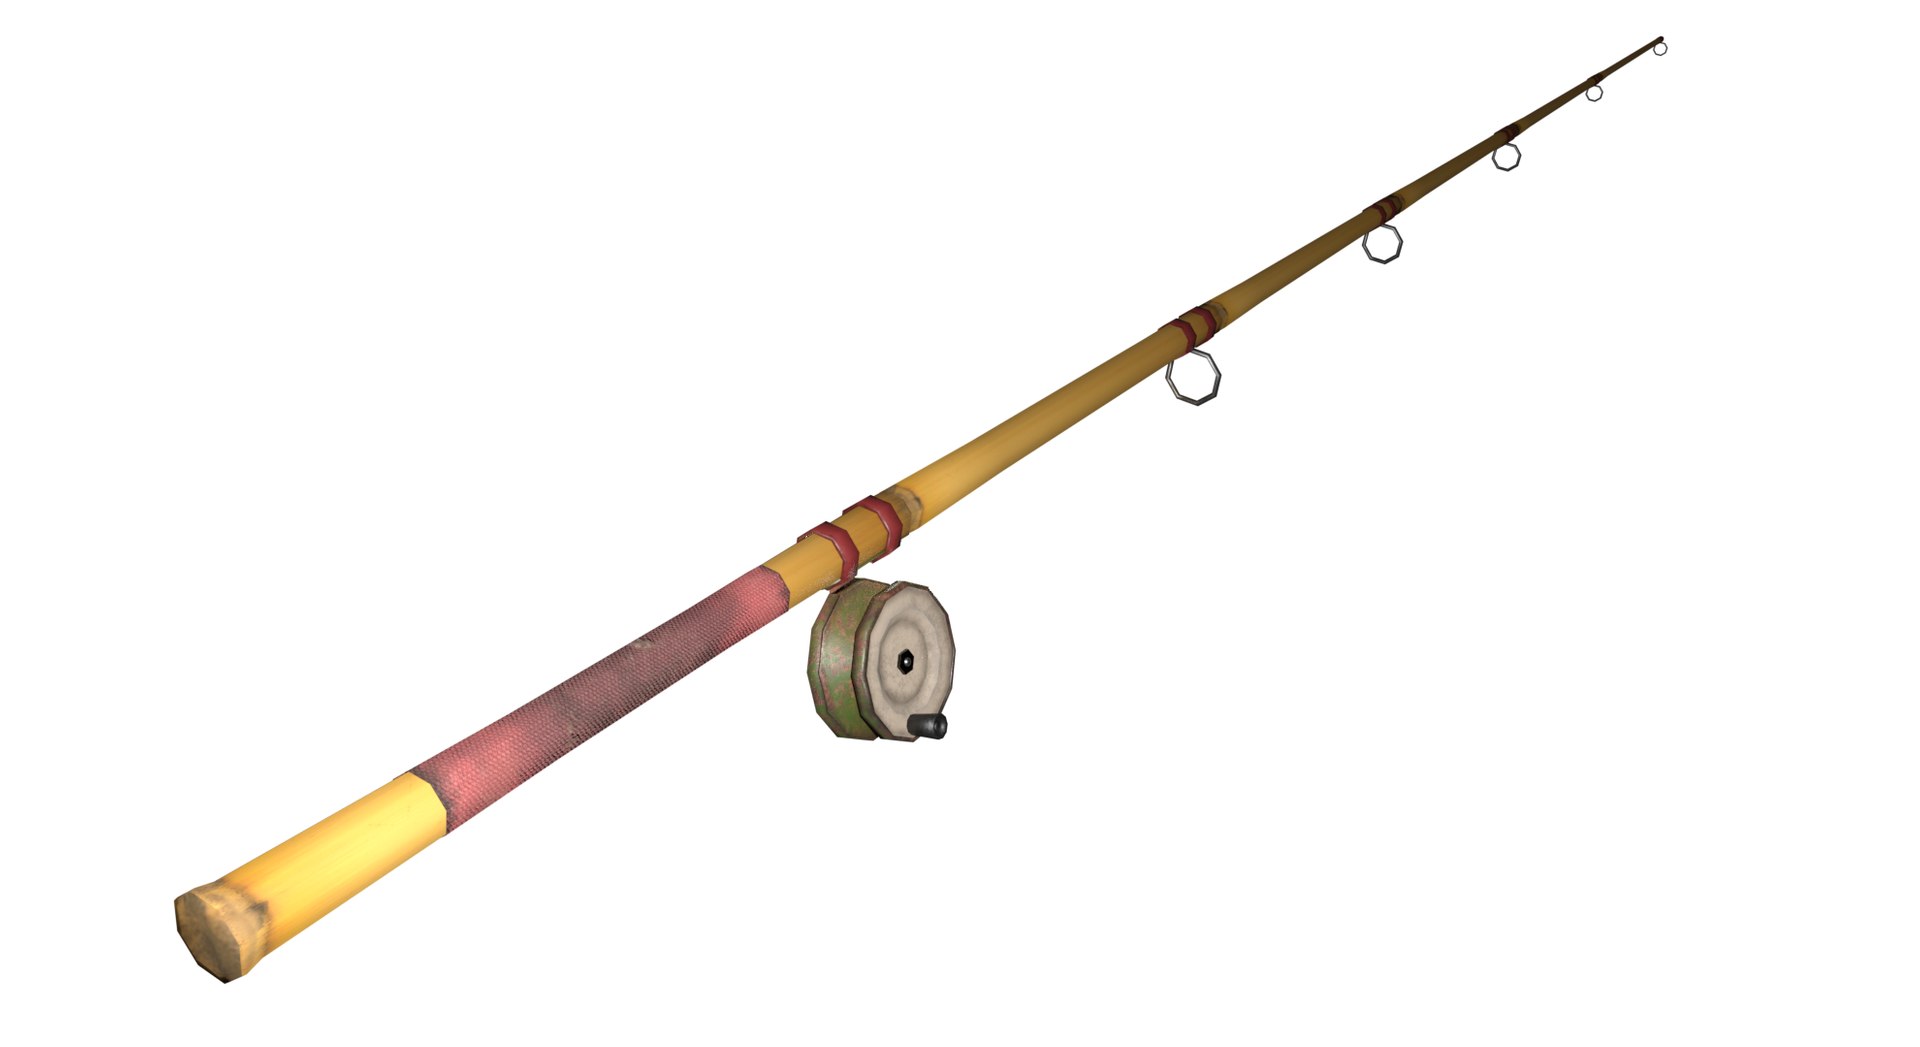 Old Bamboo Fishing Pole 3D Model - TurboSquid 1367340